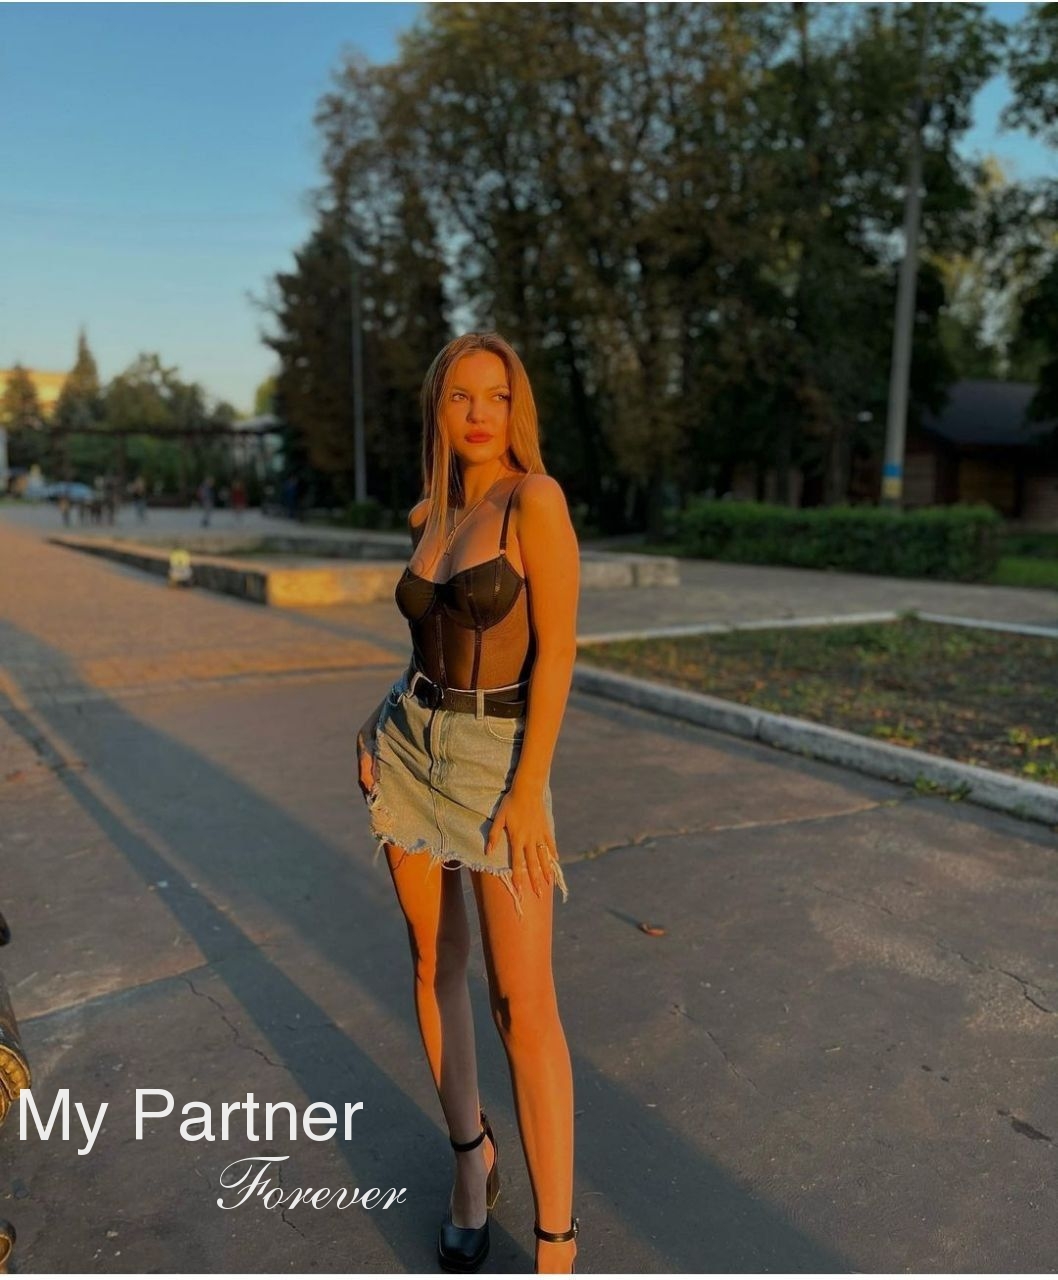 Dating Service to Meet Charming Ukrainian Woman Yuliya from Odessa, Ukraine